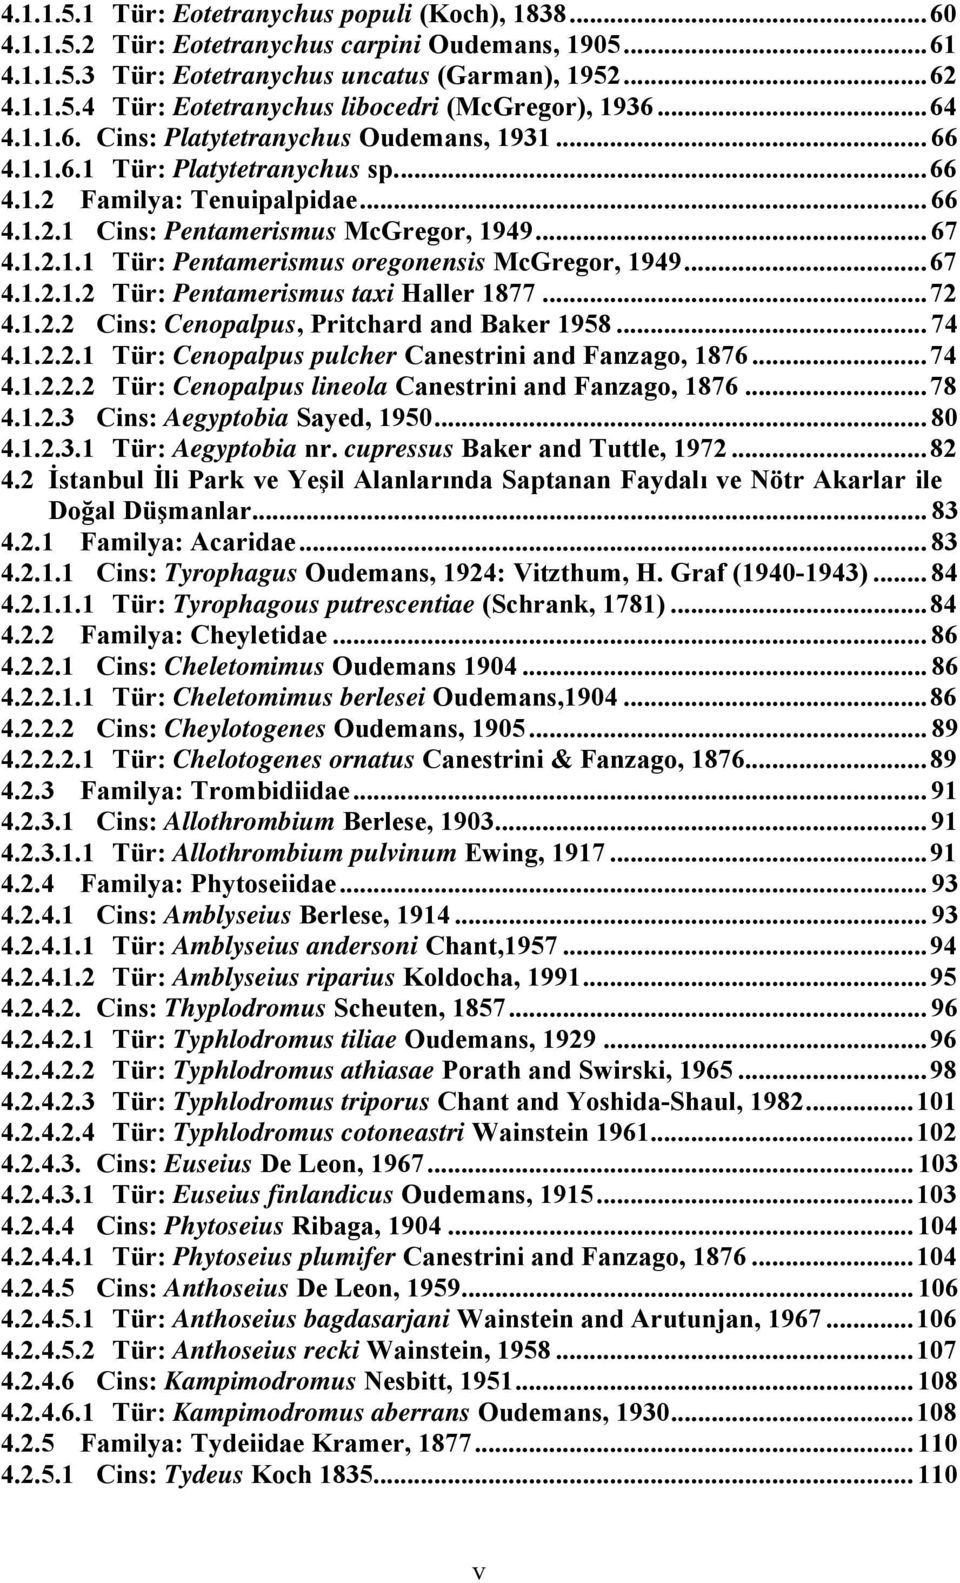 ..67 4.1.2.1.2 Tür: Pentamerismus taxi Haller 1877...72 4.1.2.2 Cins: Cenopalpus, Pritchard and Baker 1958... 74 4.1.2.2.1 Tür: Cenopalpus pulcher Canestrini and Fanzago, 1876...74 4.1.2.2.2 Tür: Cenopalpus lineola Canestrini and Fanzago, 1876.